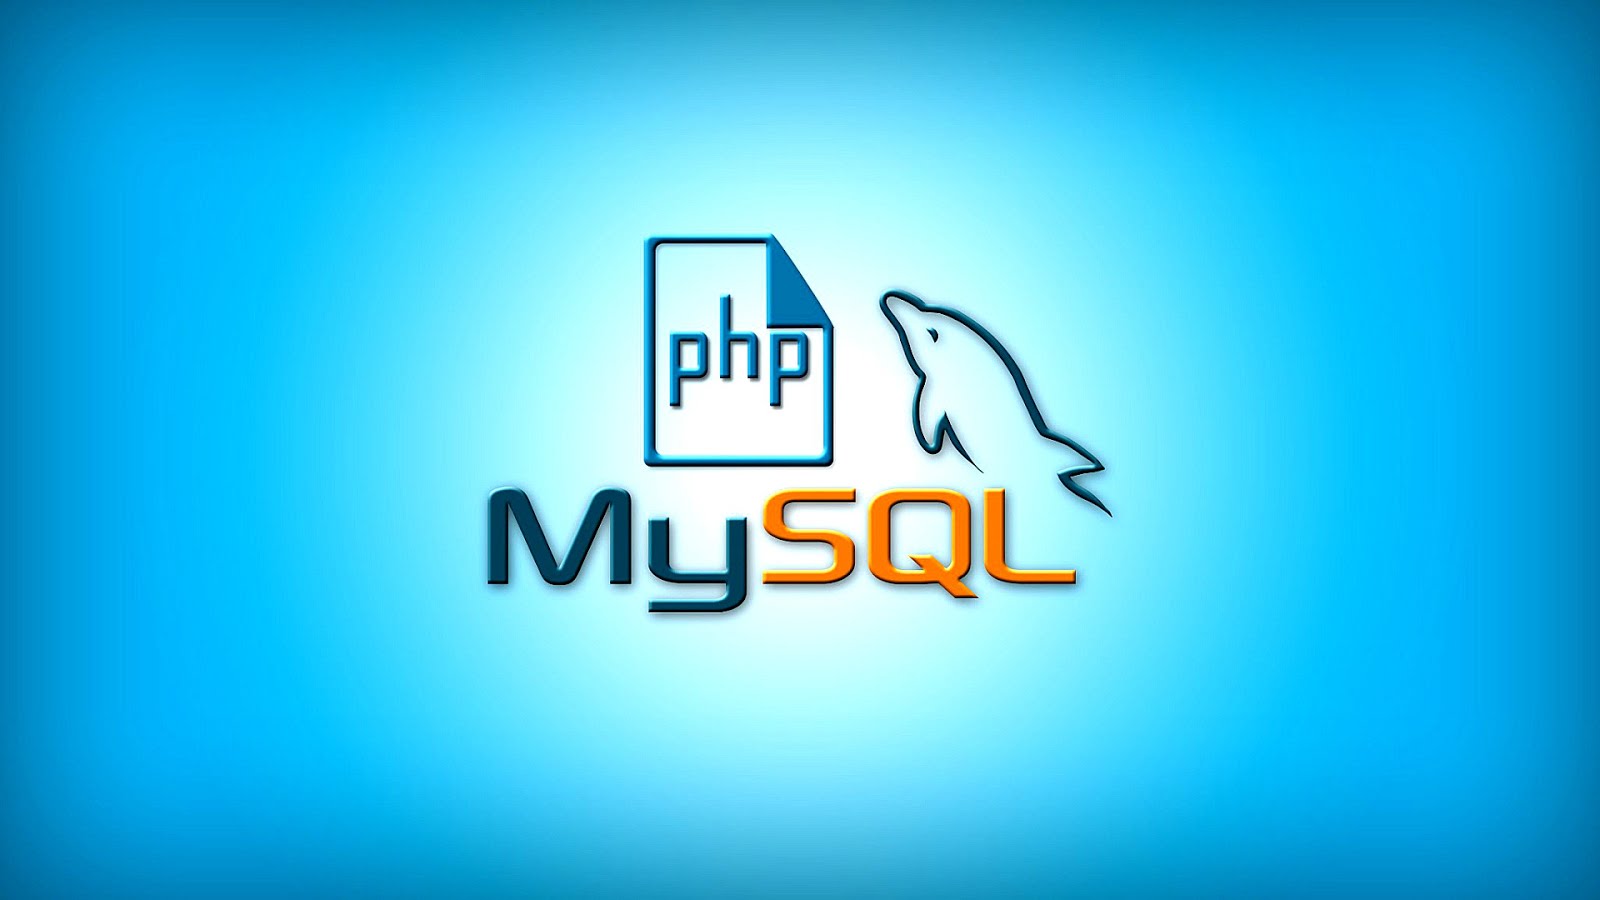 MySQL - Mysql Learn Learning - Learning Choices